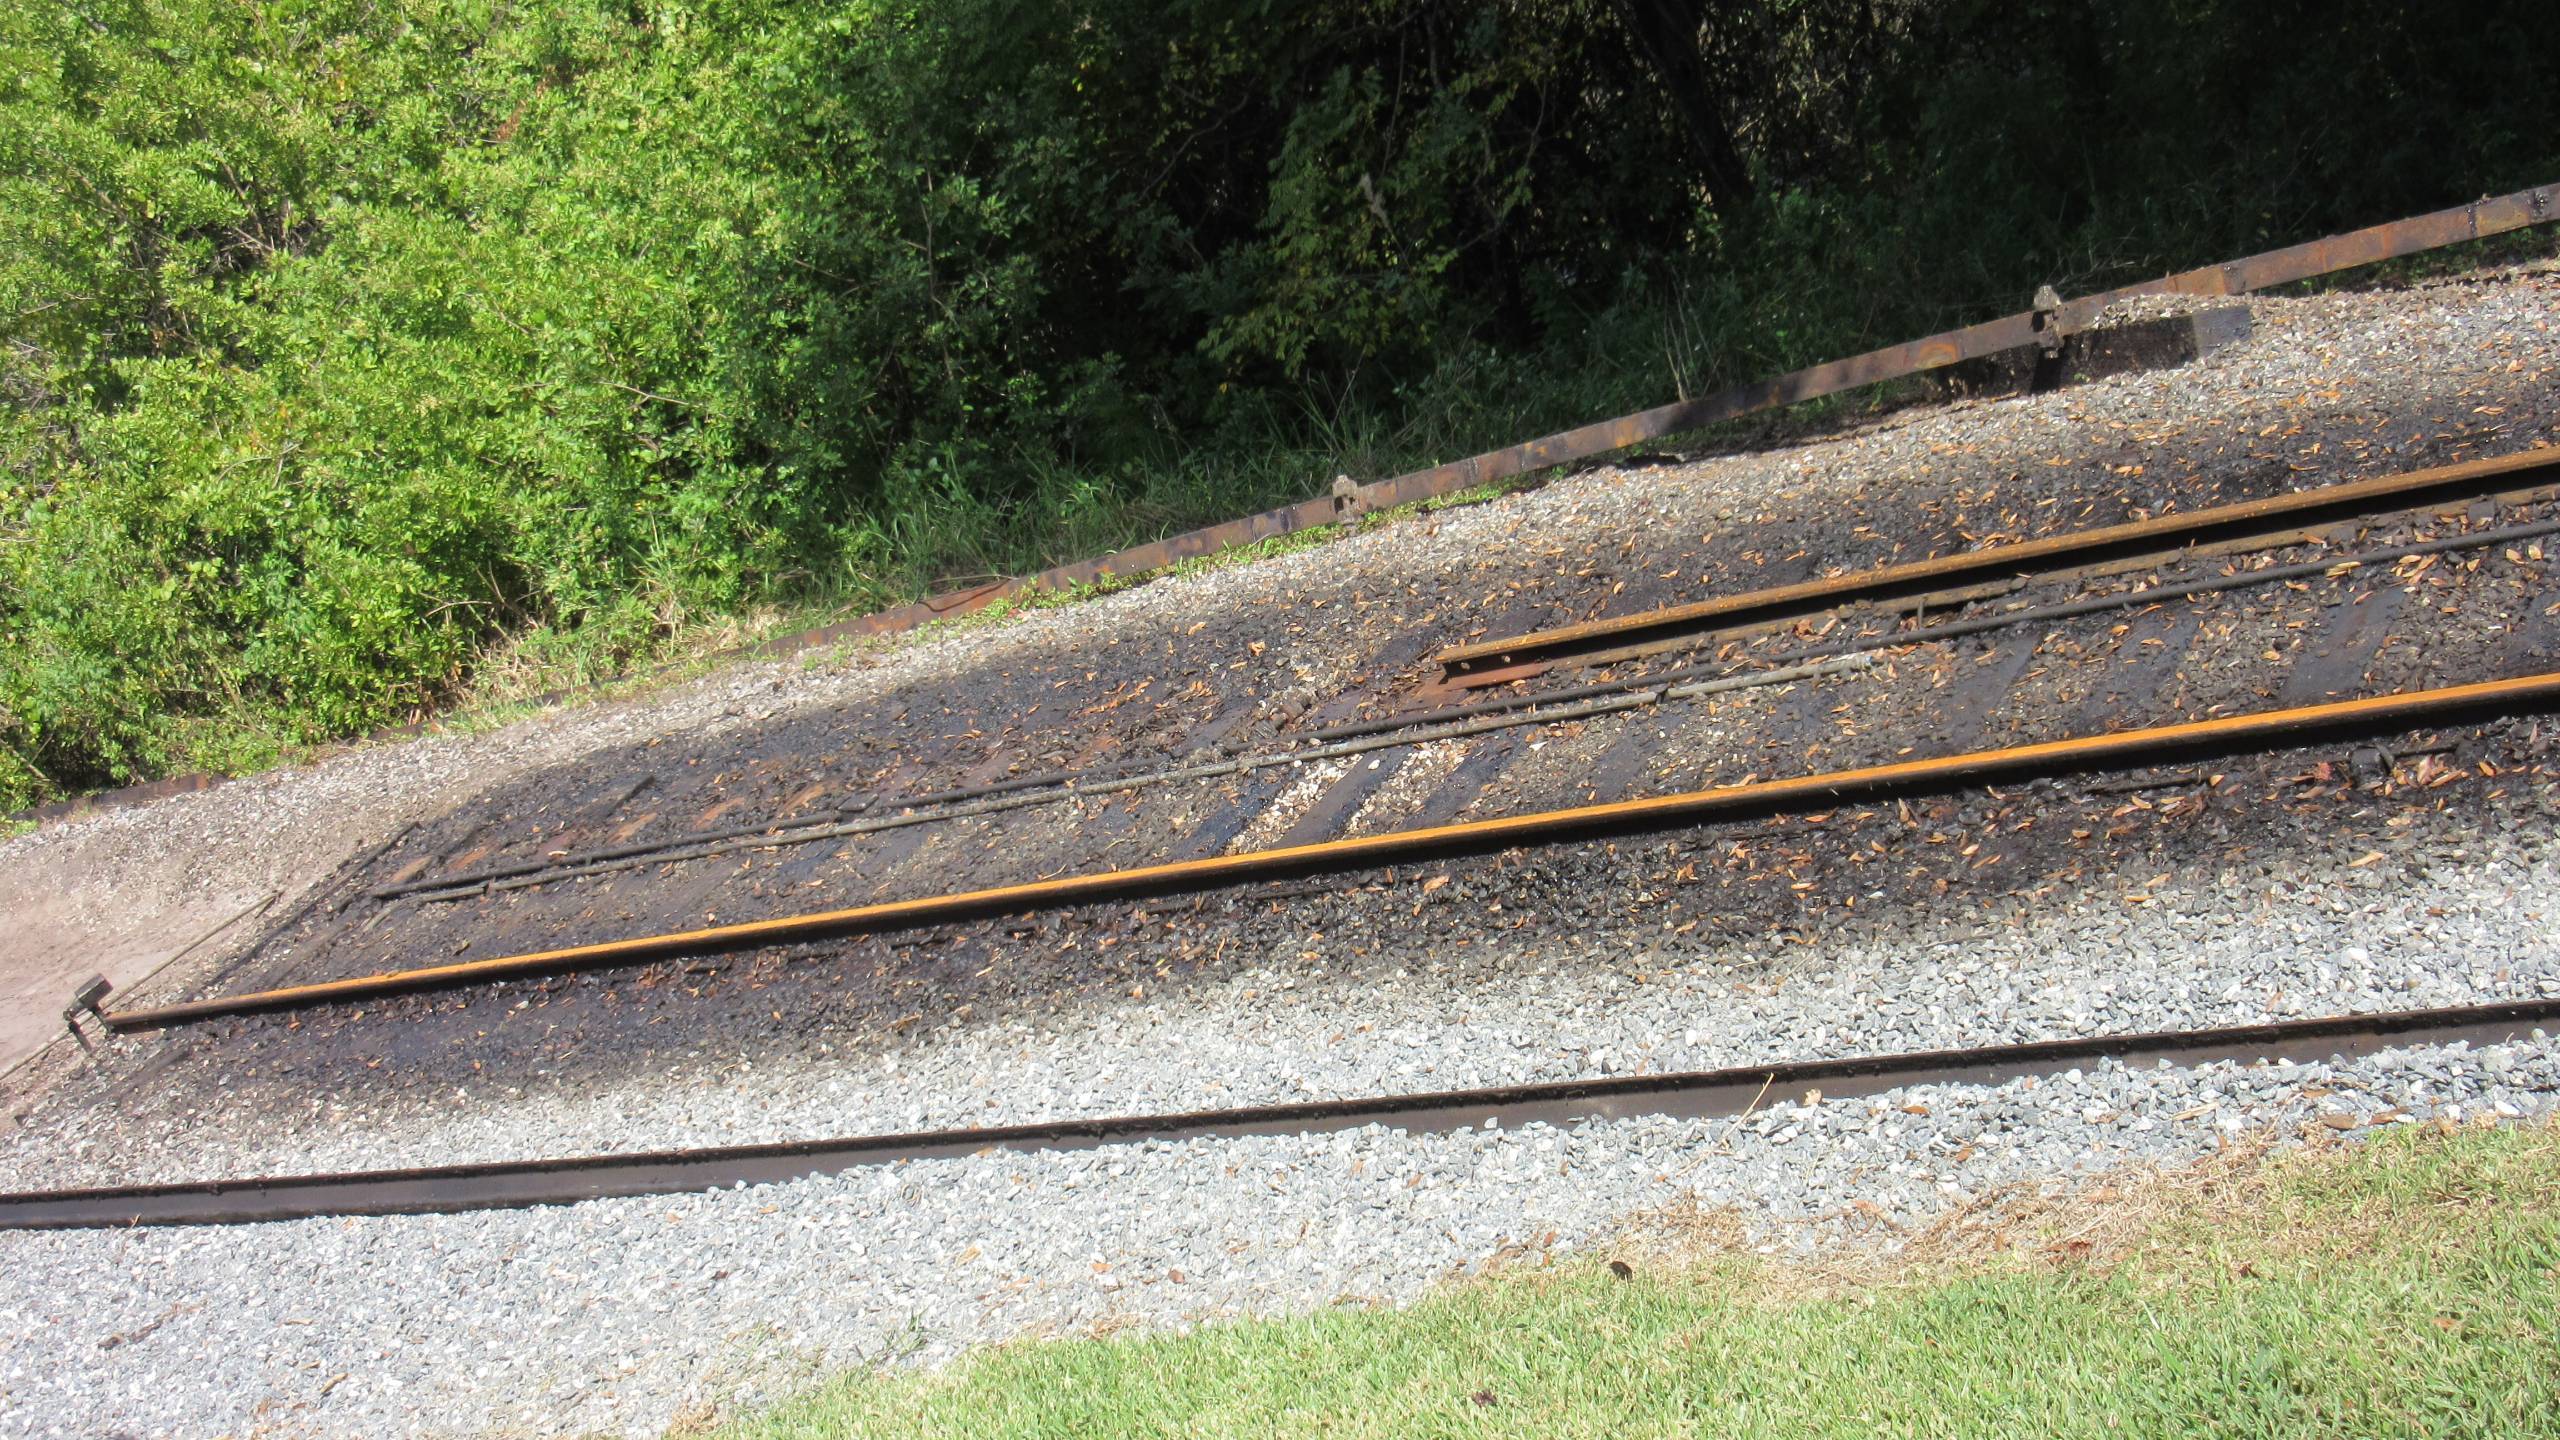 PHOTOS - A look at the Walt Disney World Railroad refurbishment